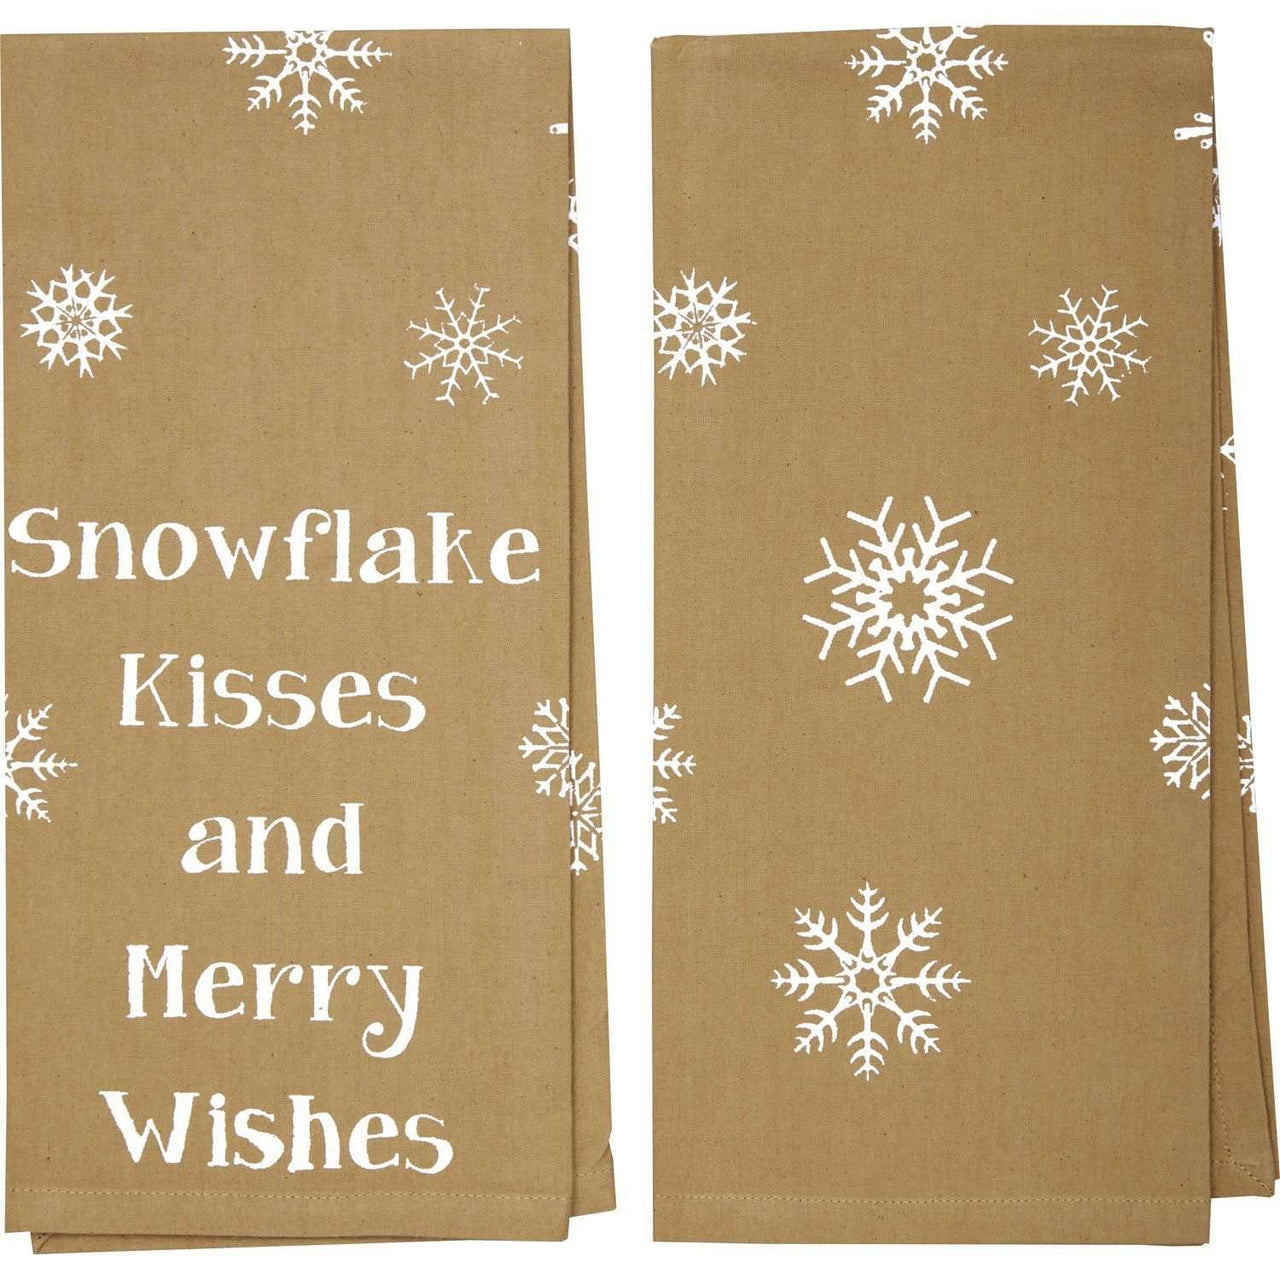 Snowflake Burlap Natural Snowflake Kisses Tea Towel Set of 2 19x28 VHC Brands - The Fox Decor